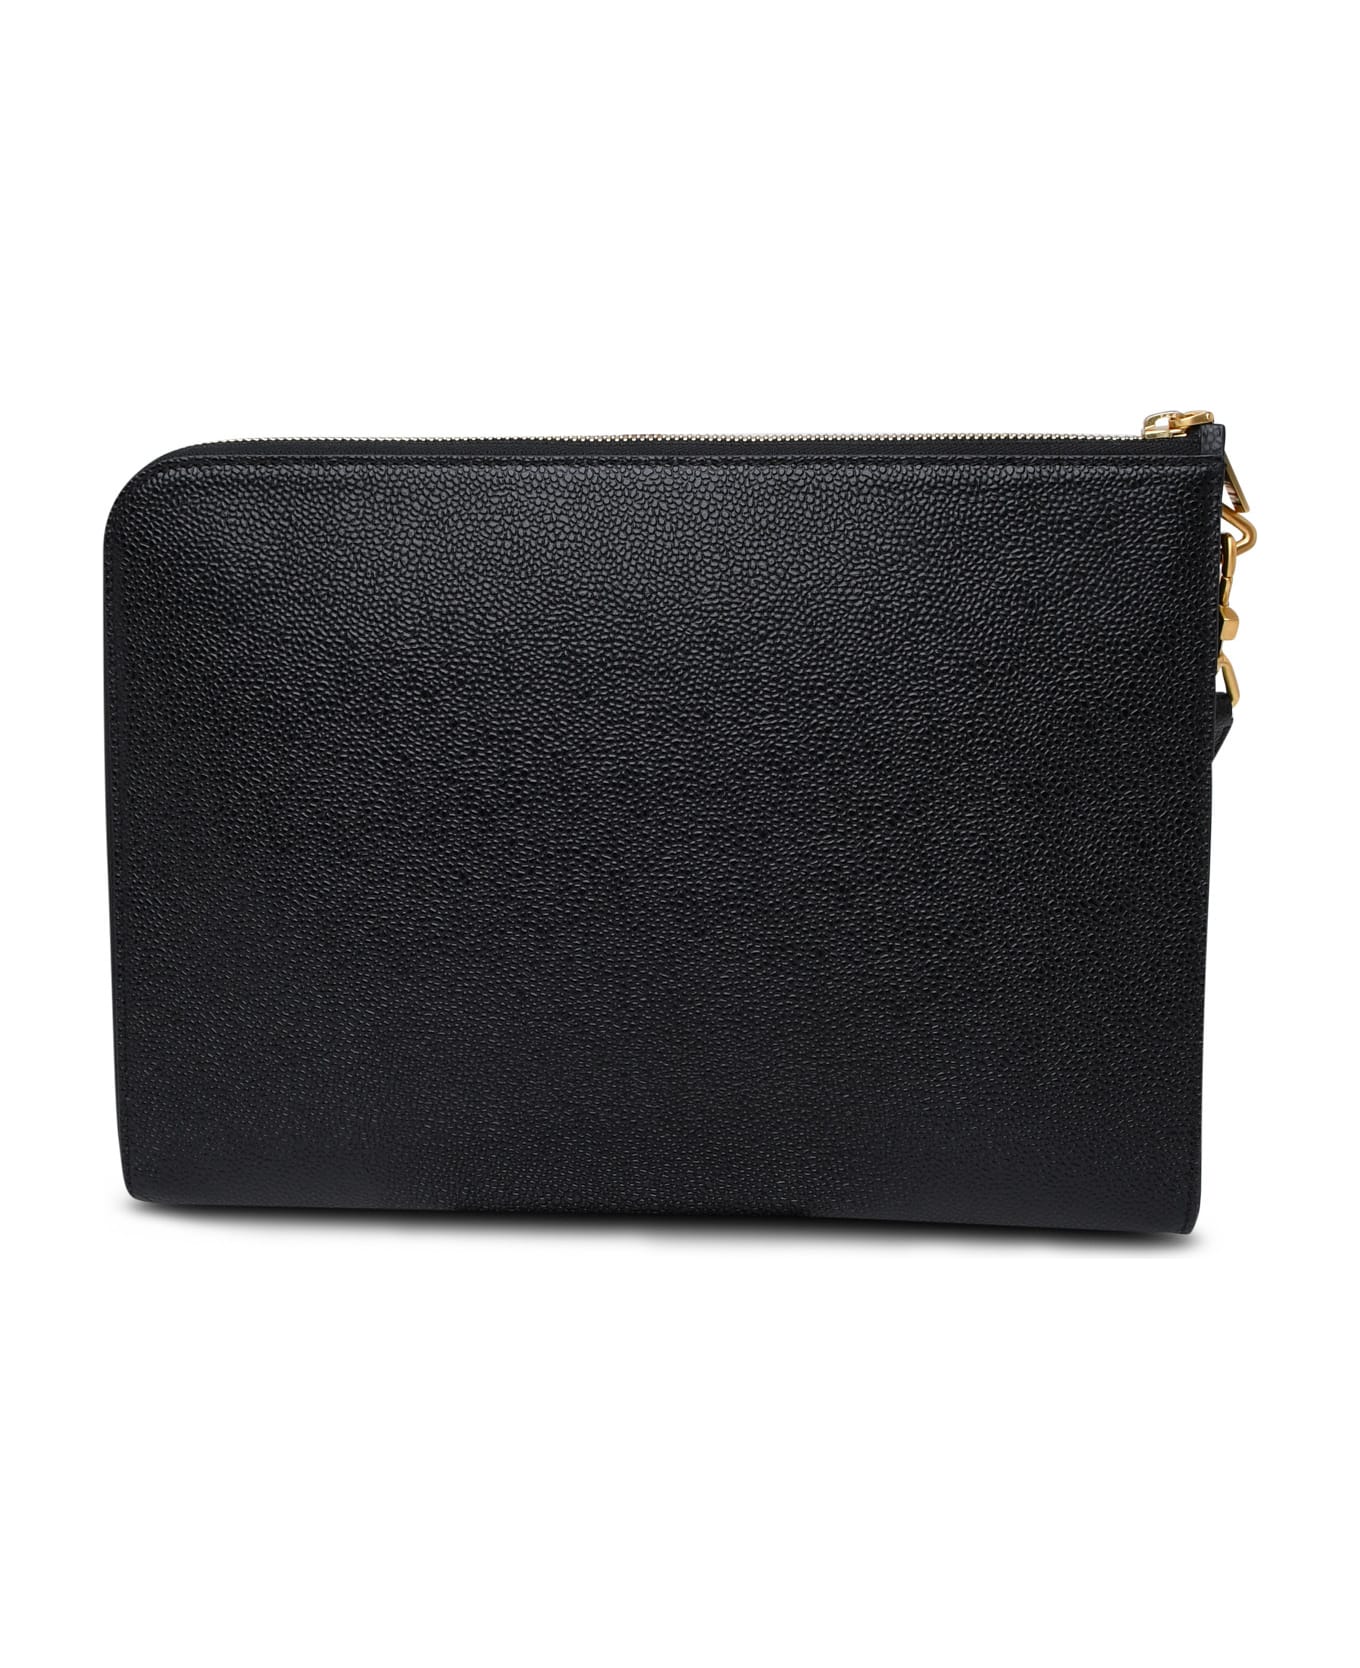 Thom Browne Medium Clutch Bag In Black Leather - Black